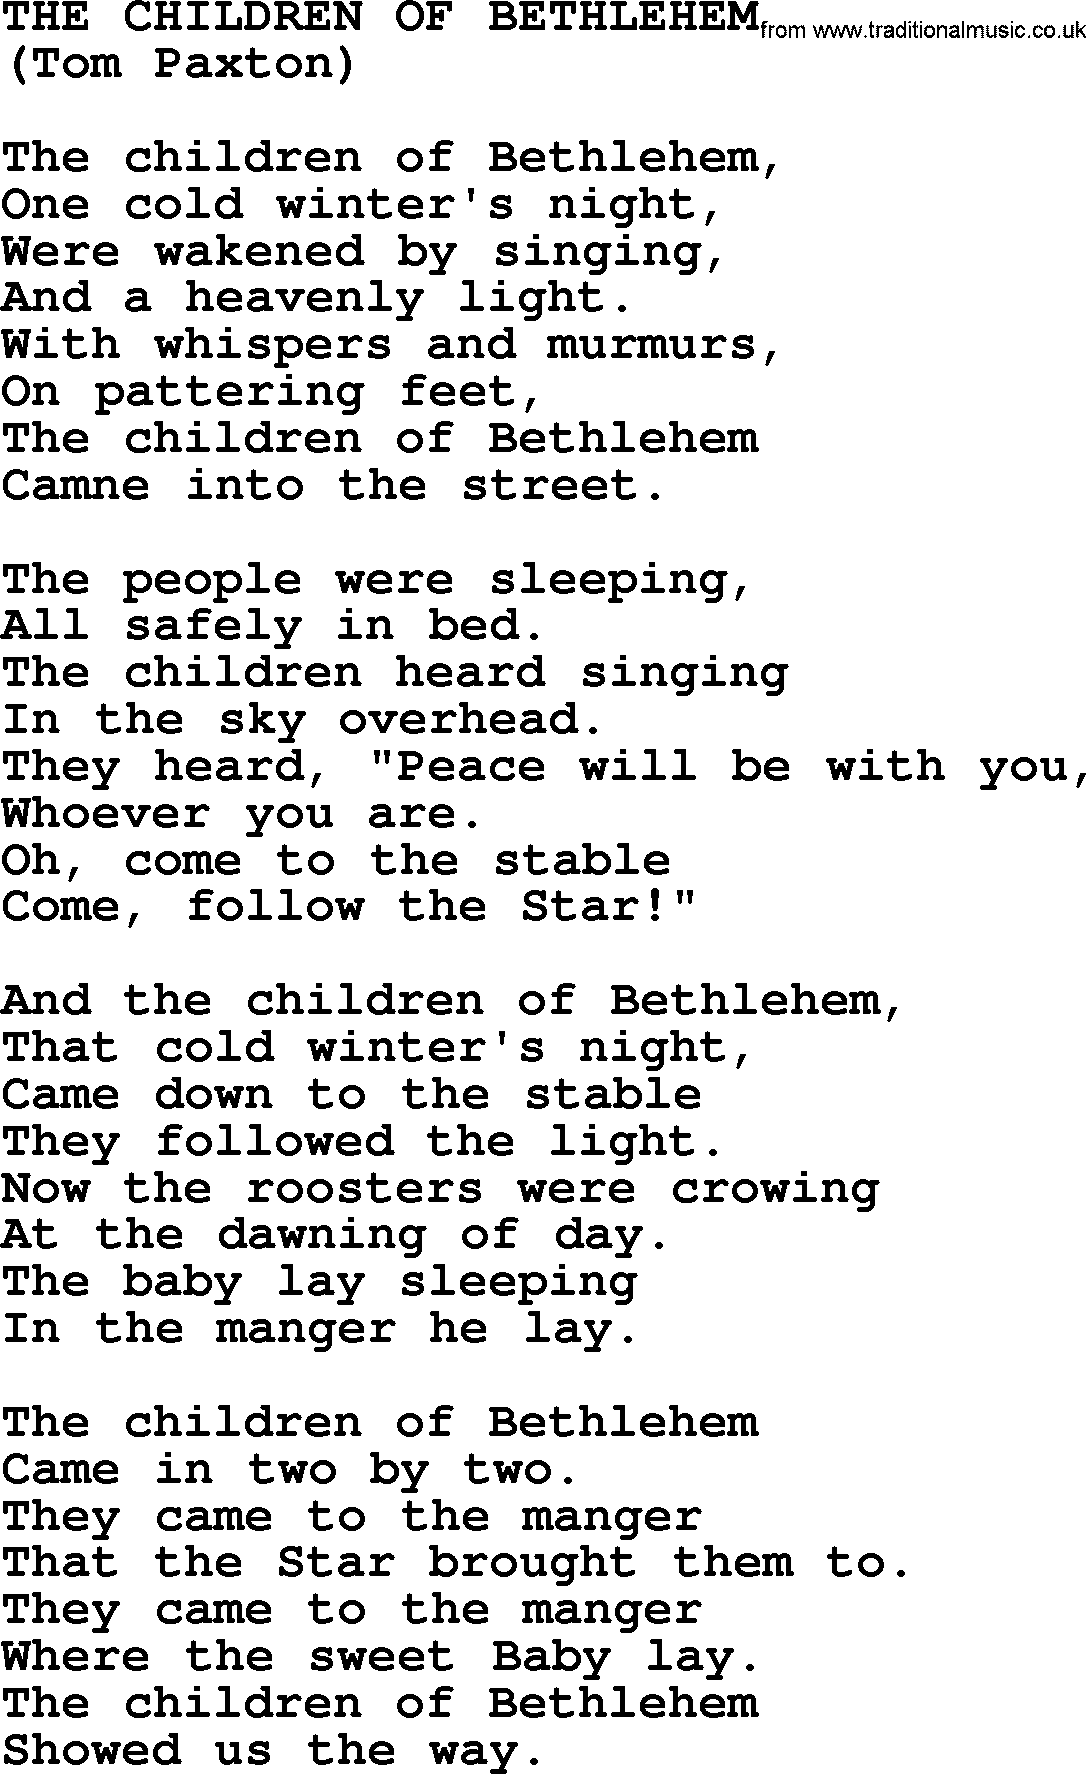 Tom Paxton song: The Children Of Bethlehem, lyrics